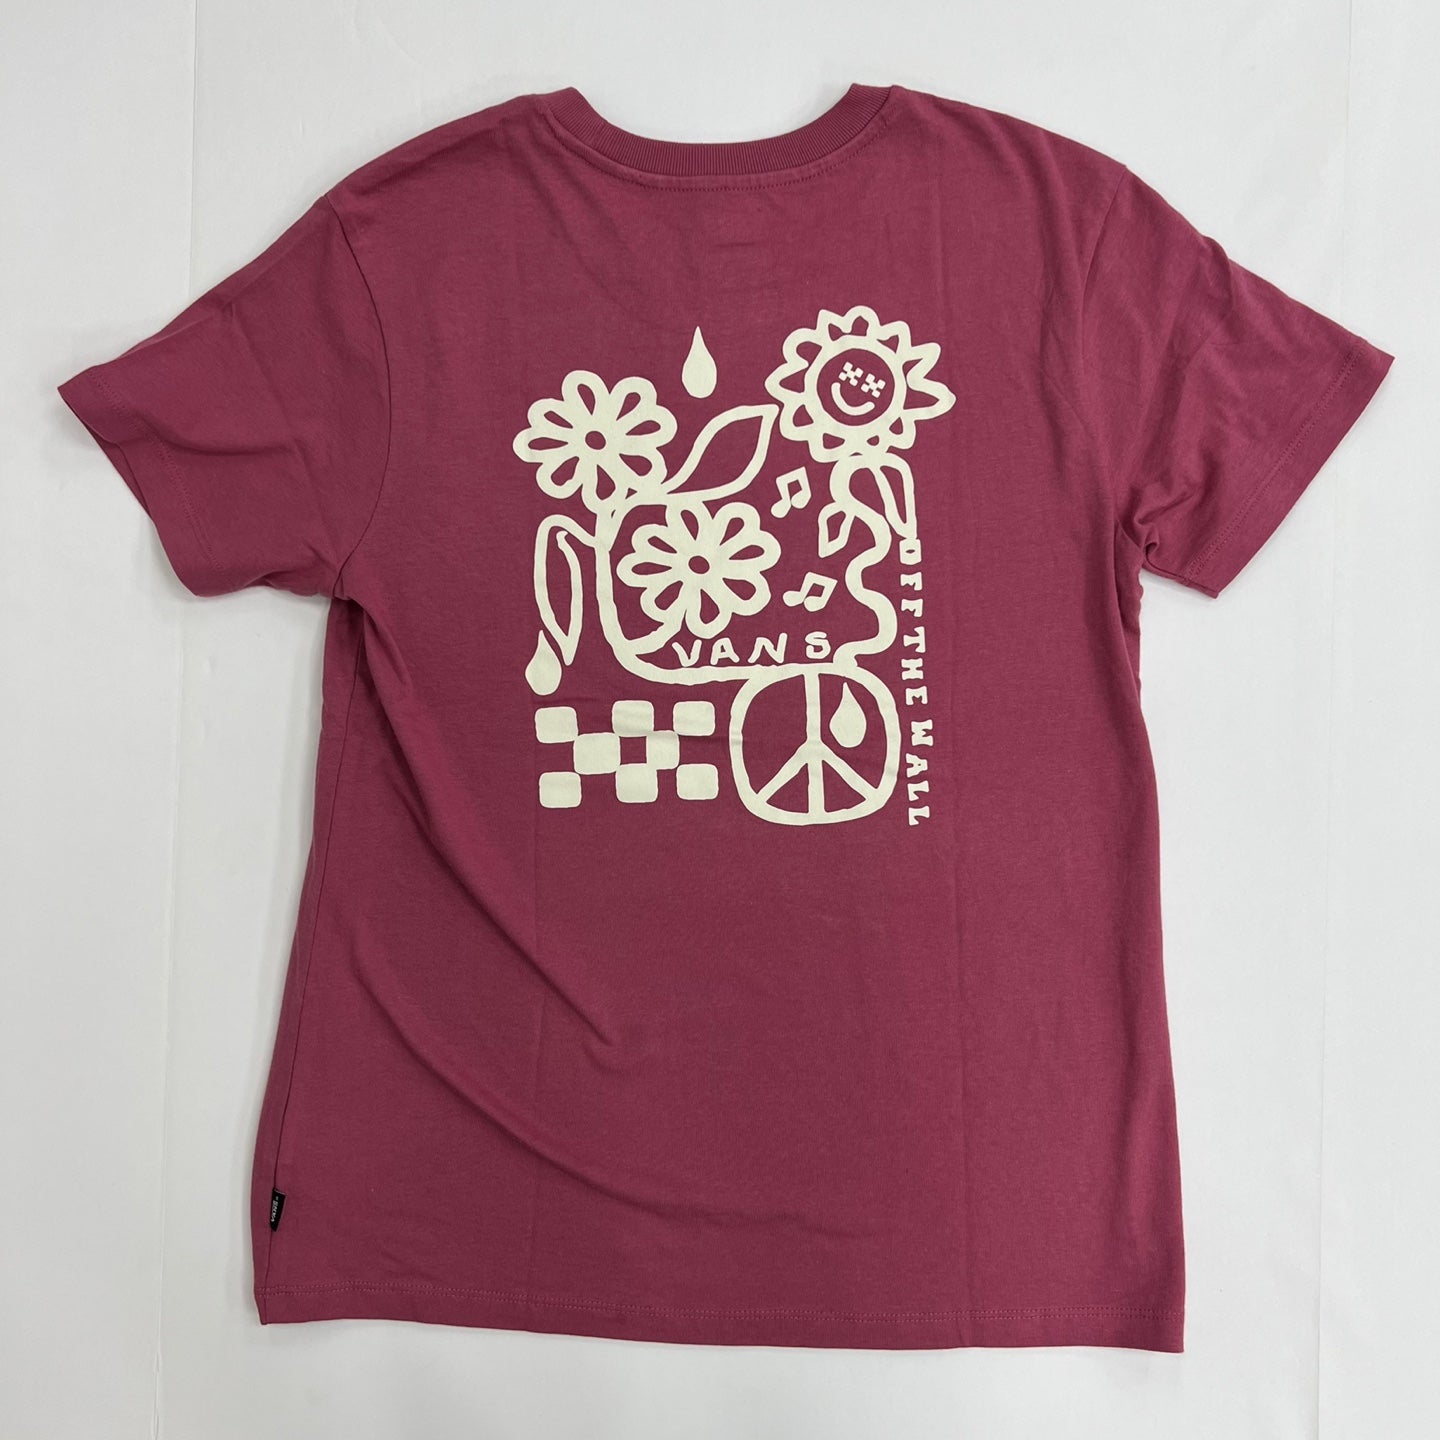 VANS Women's Rose Floral Grpahic Print T-Shirt